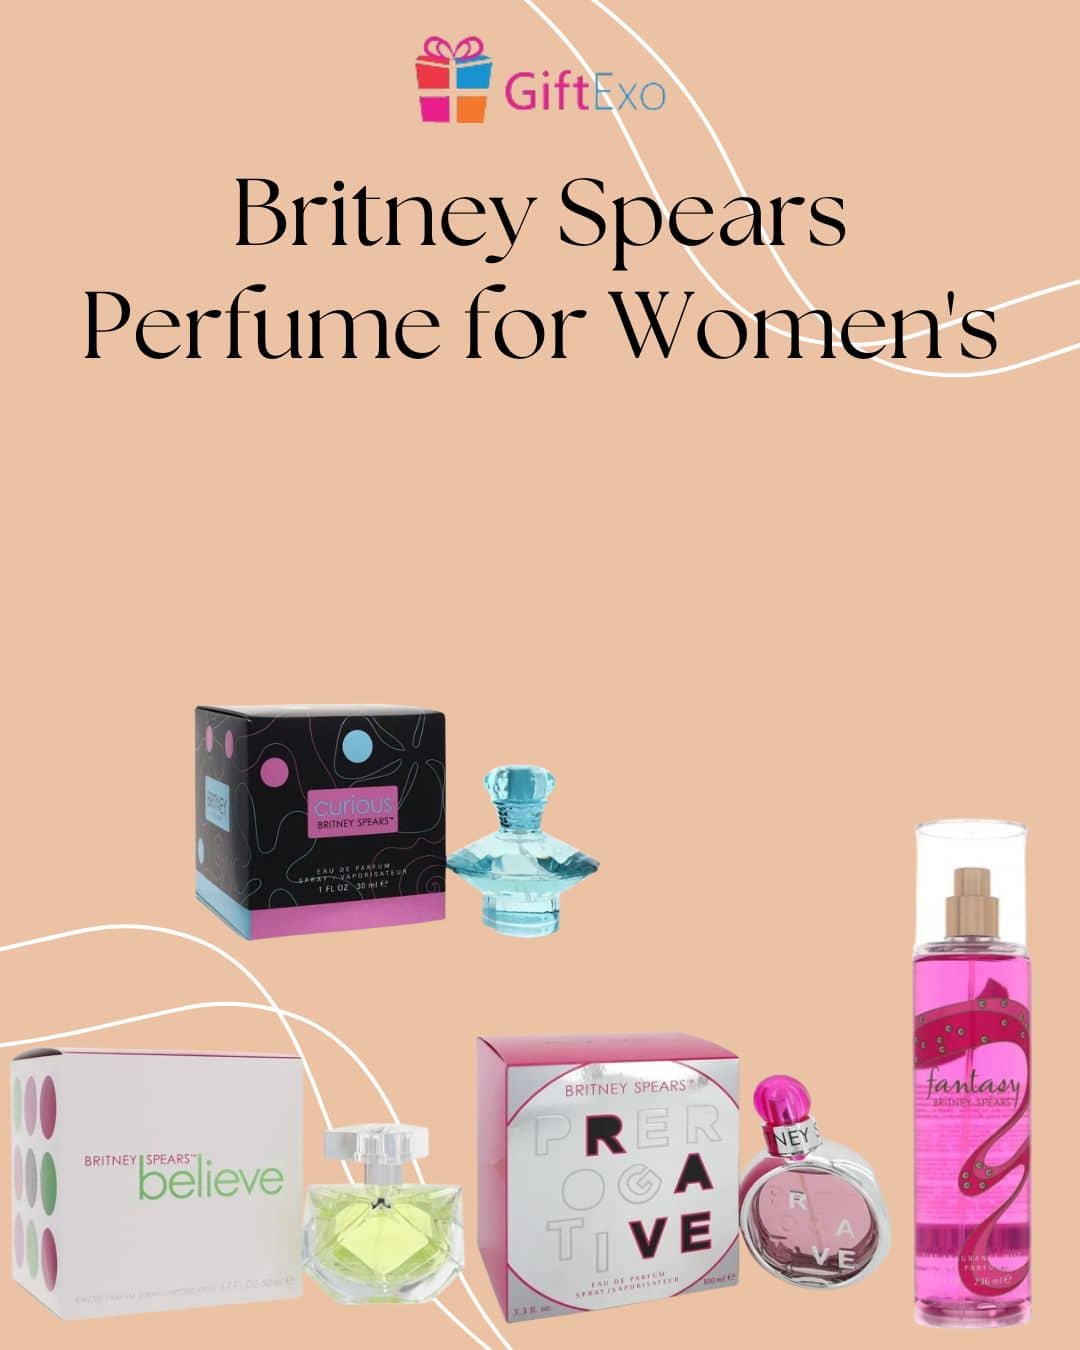 Britney Spears Perfume for Women's